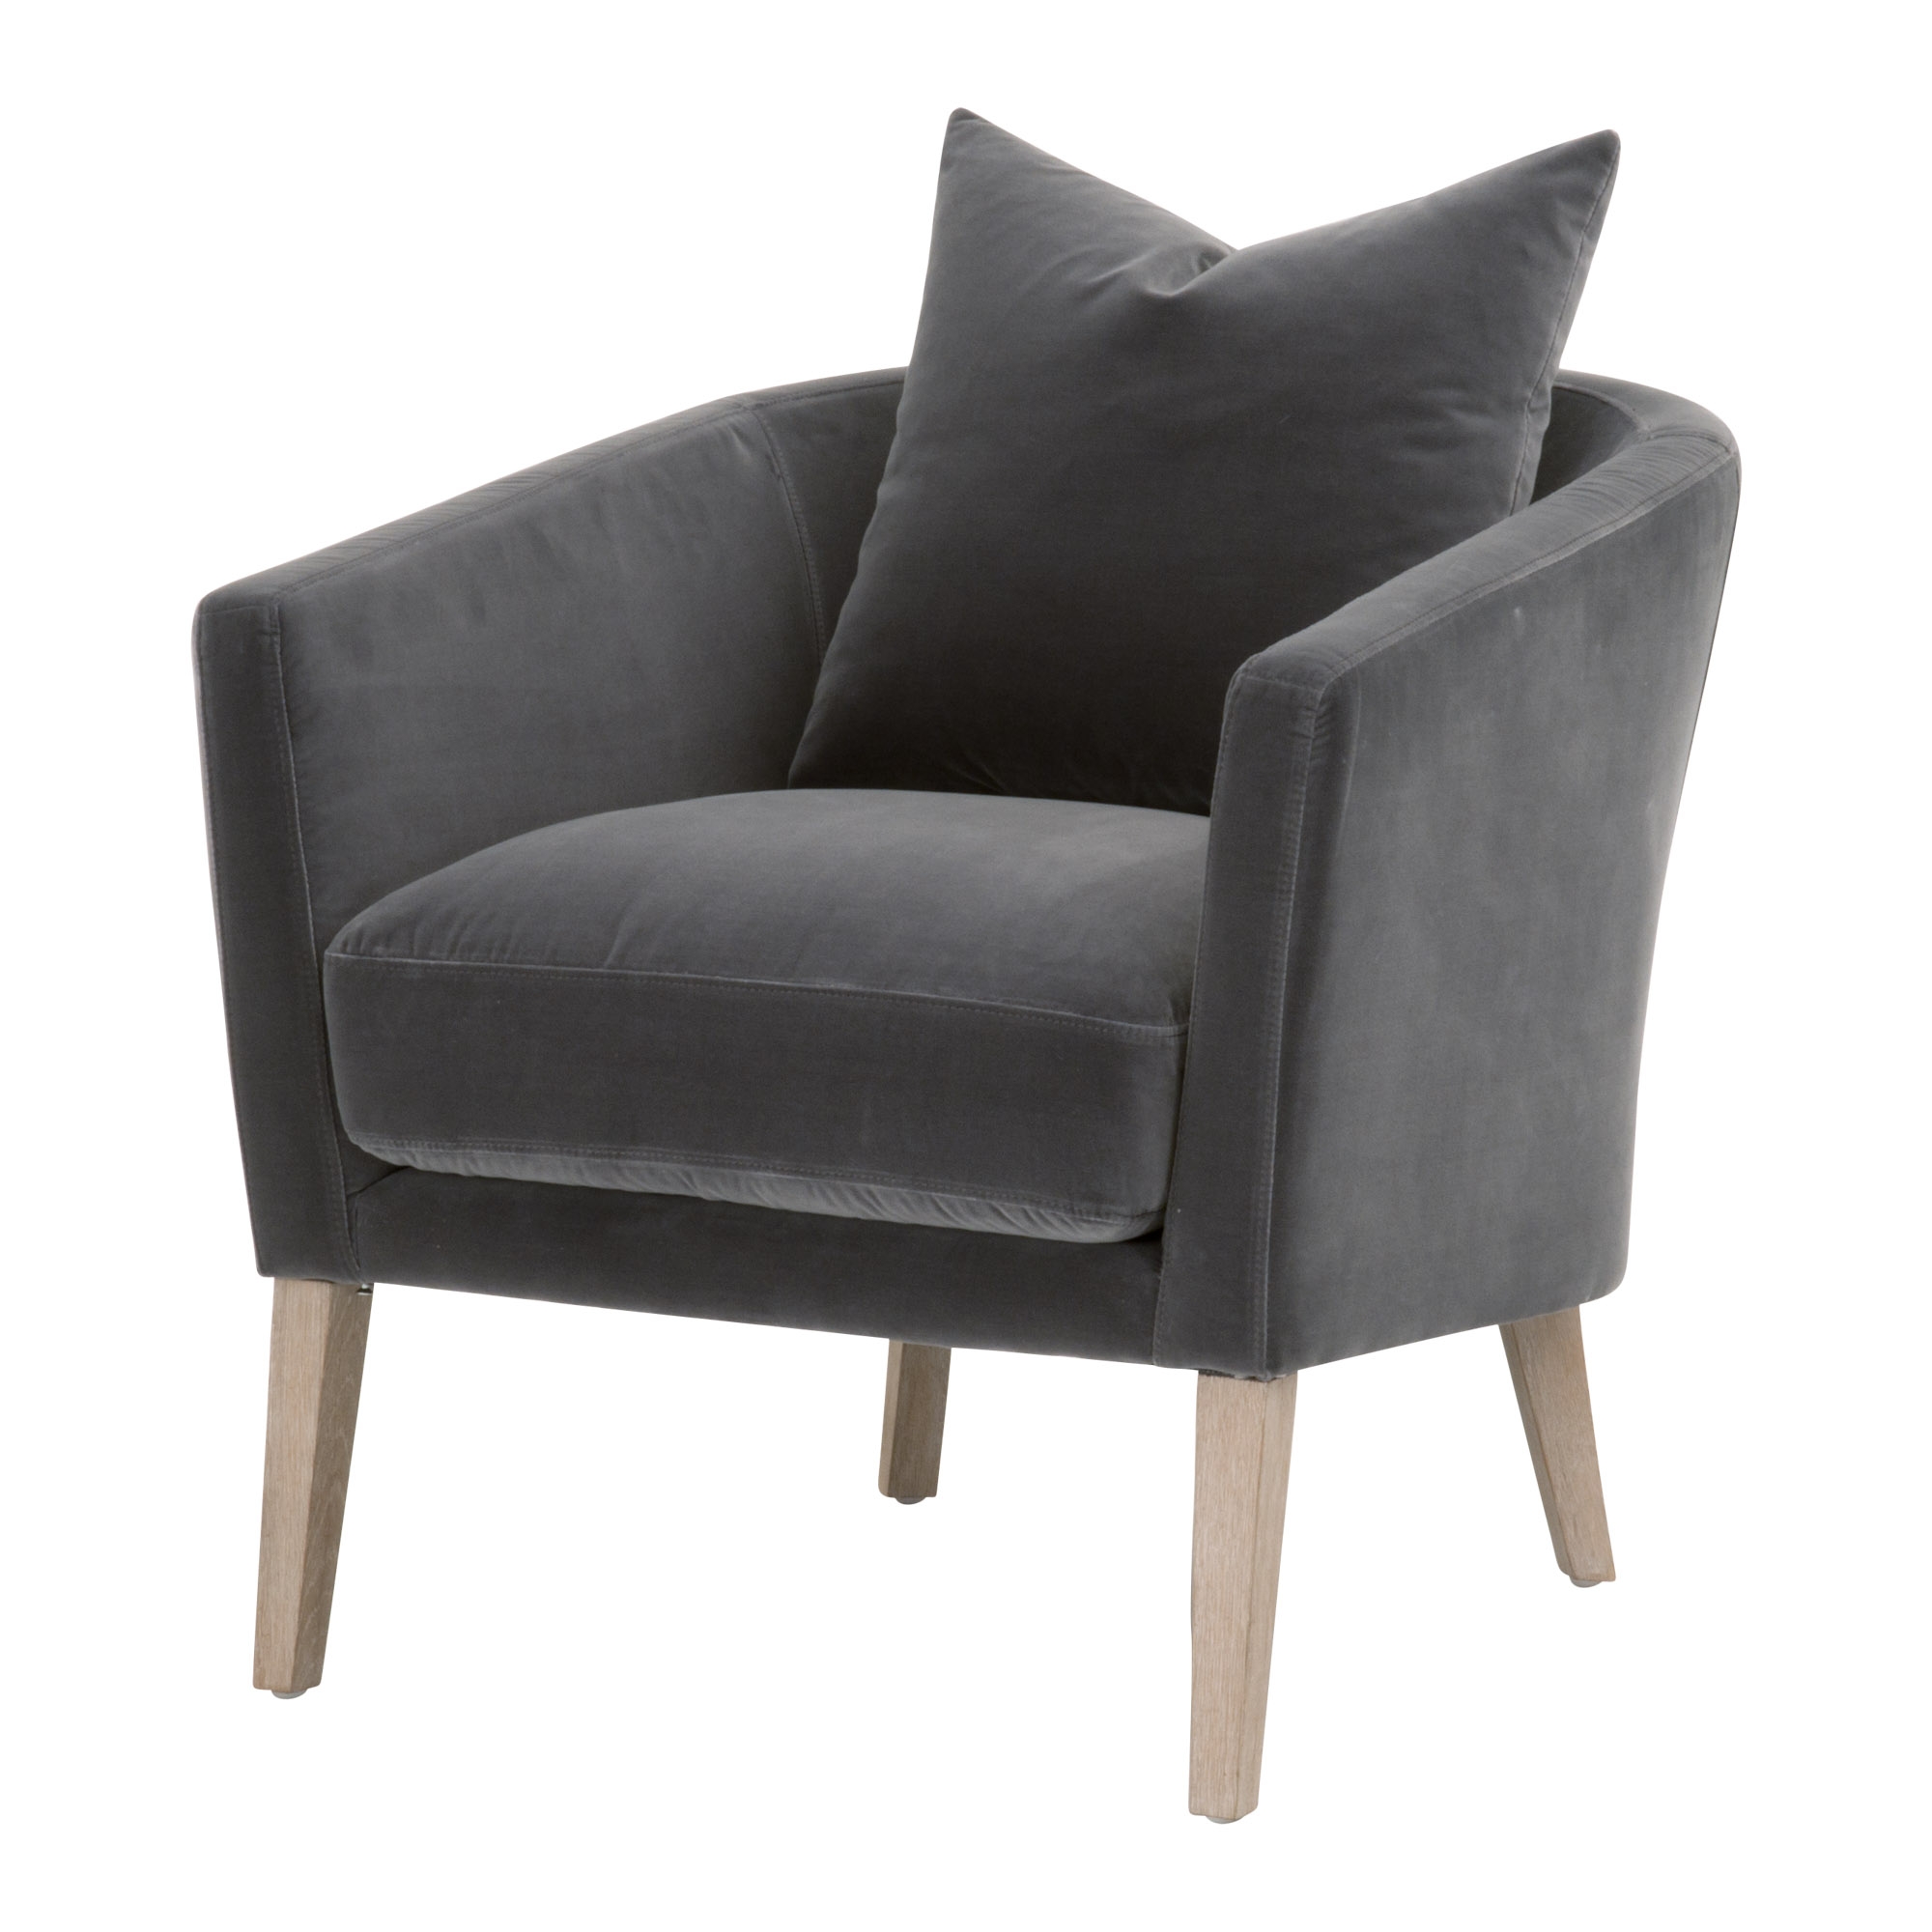 Gordon Club Chair, Charcoal - Image 1